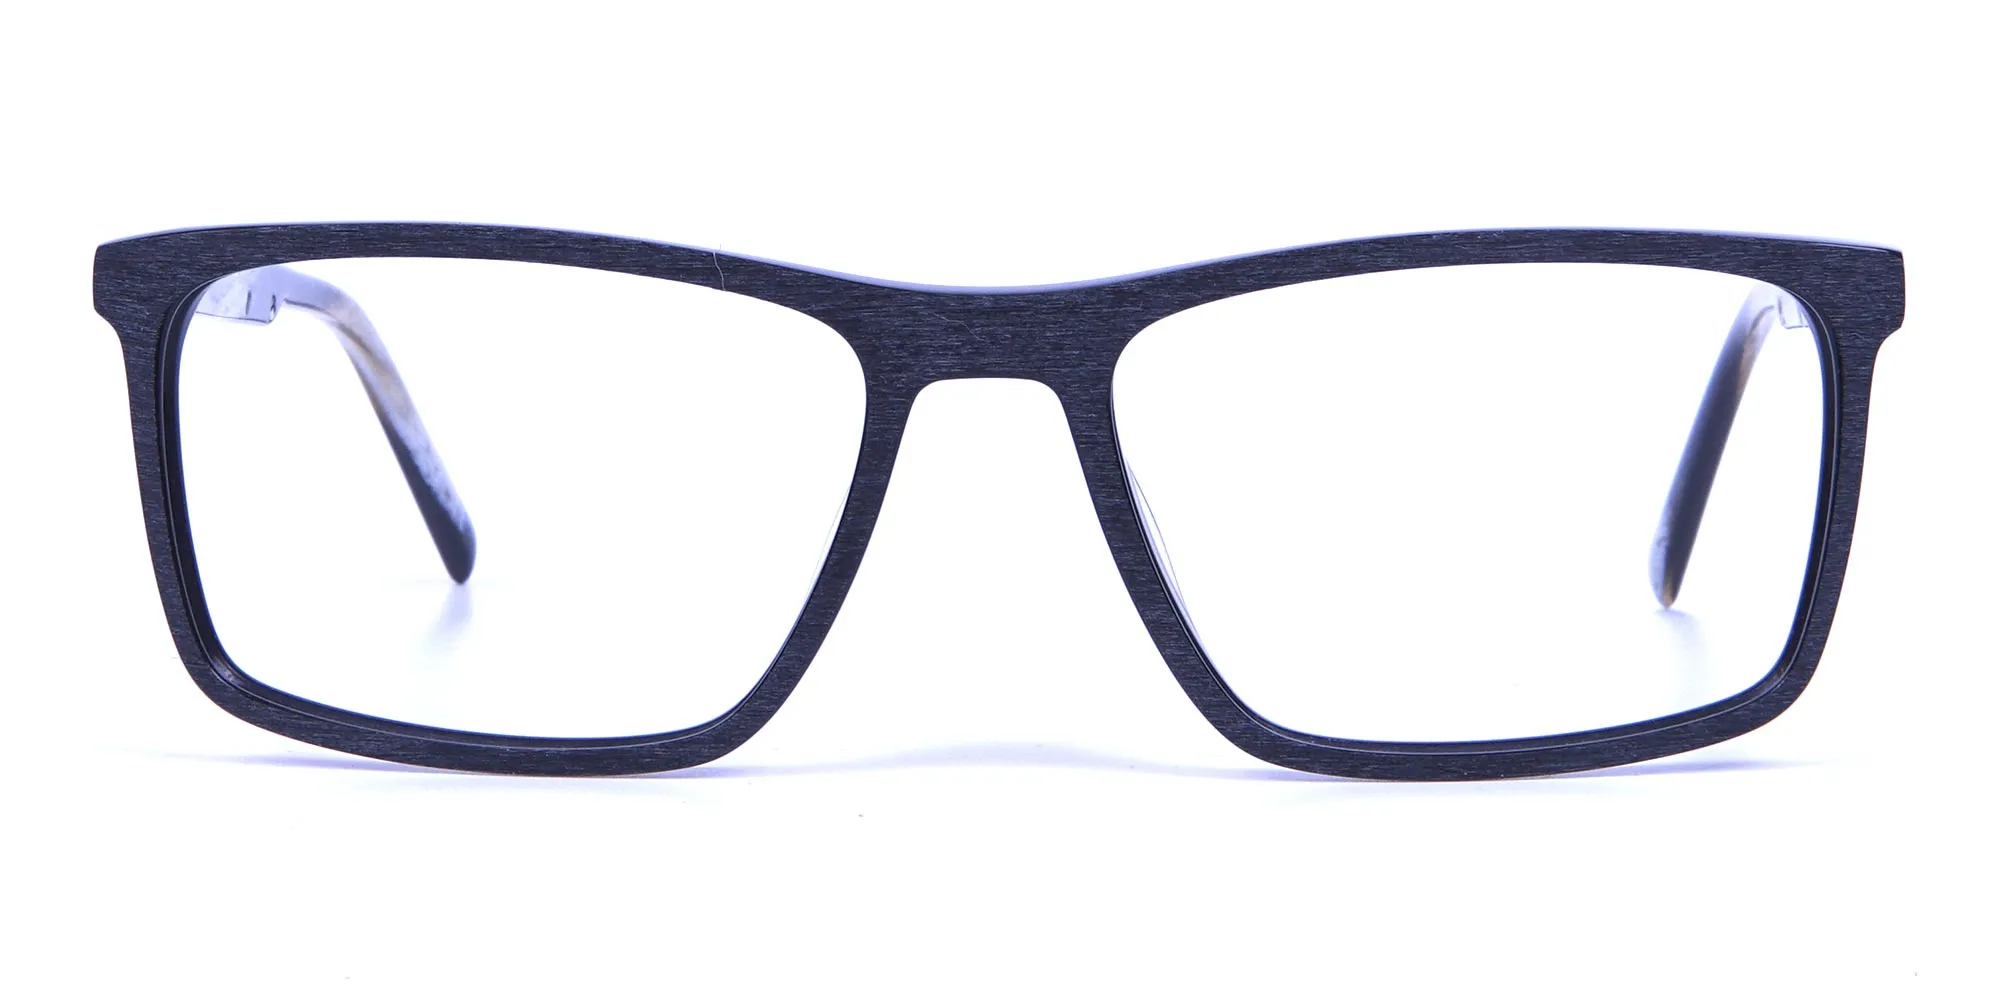 Wooden Texture Black Rectangular Glasses - 1